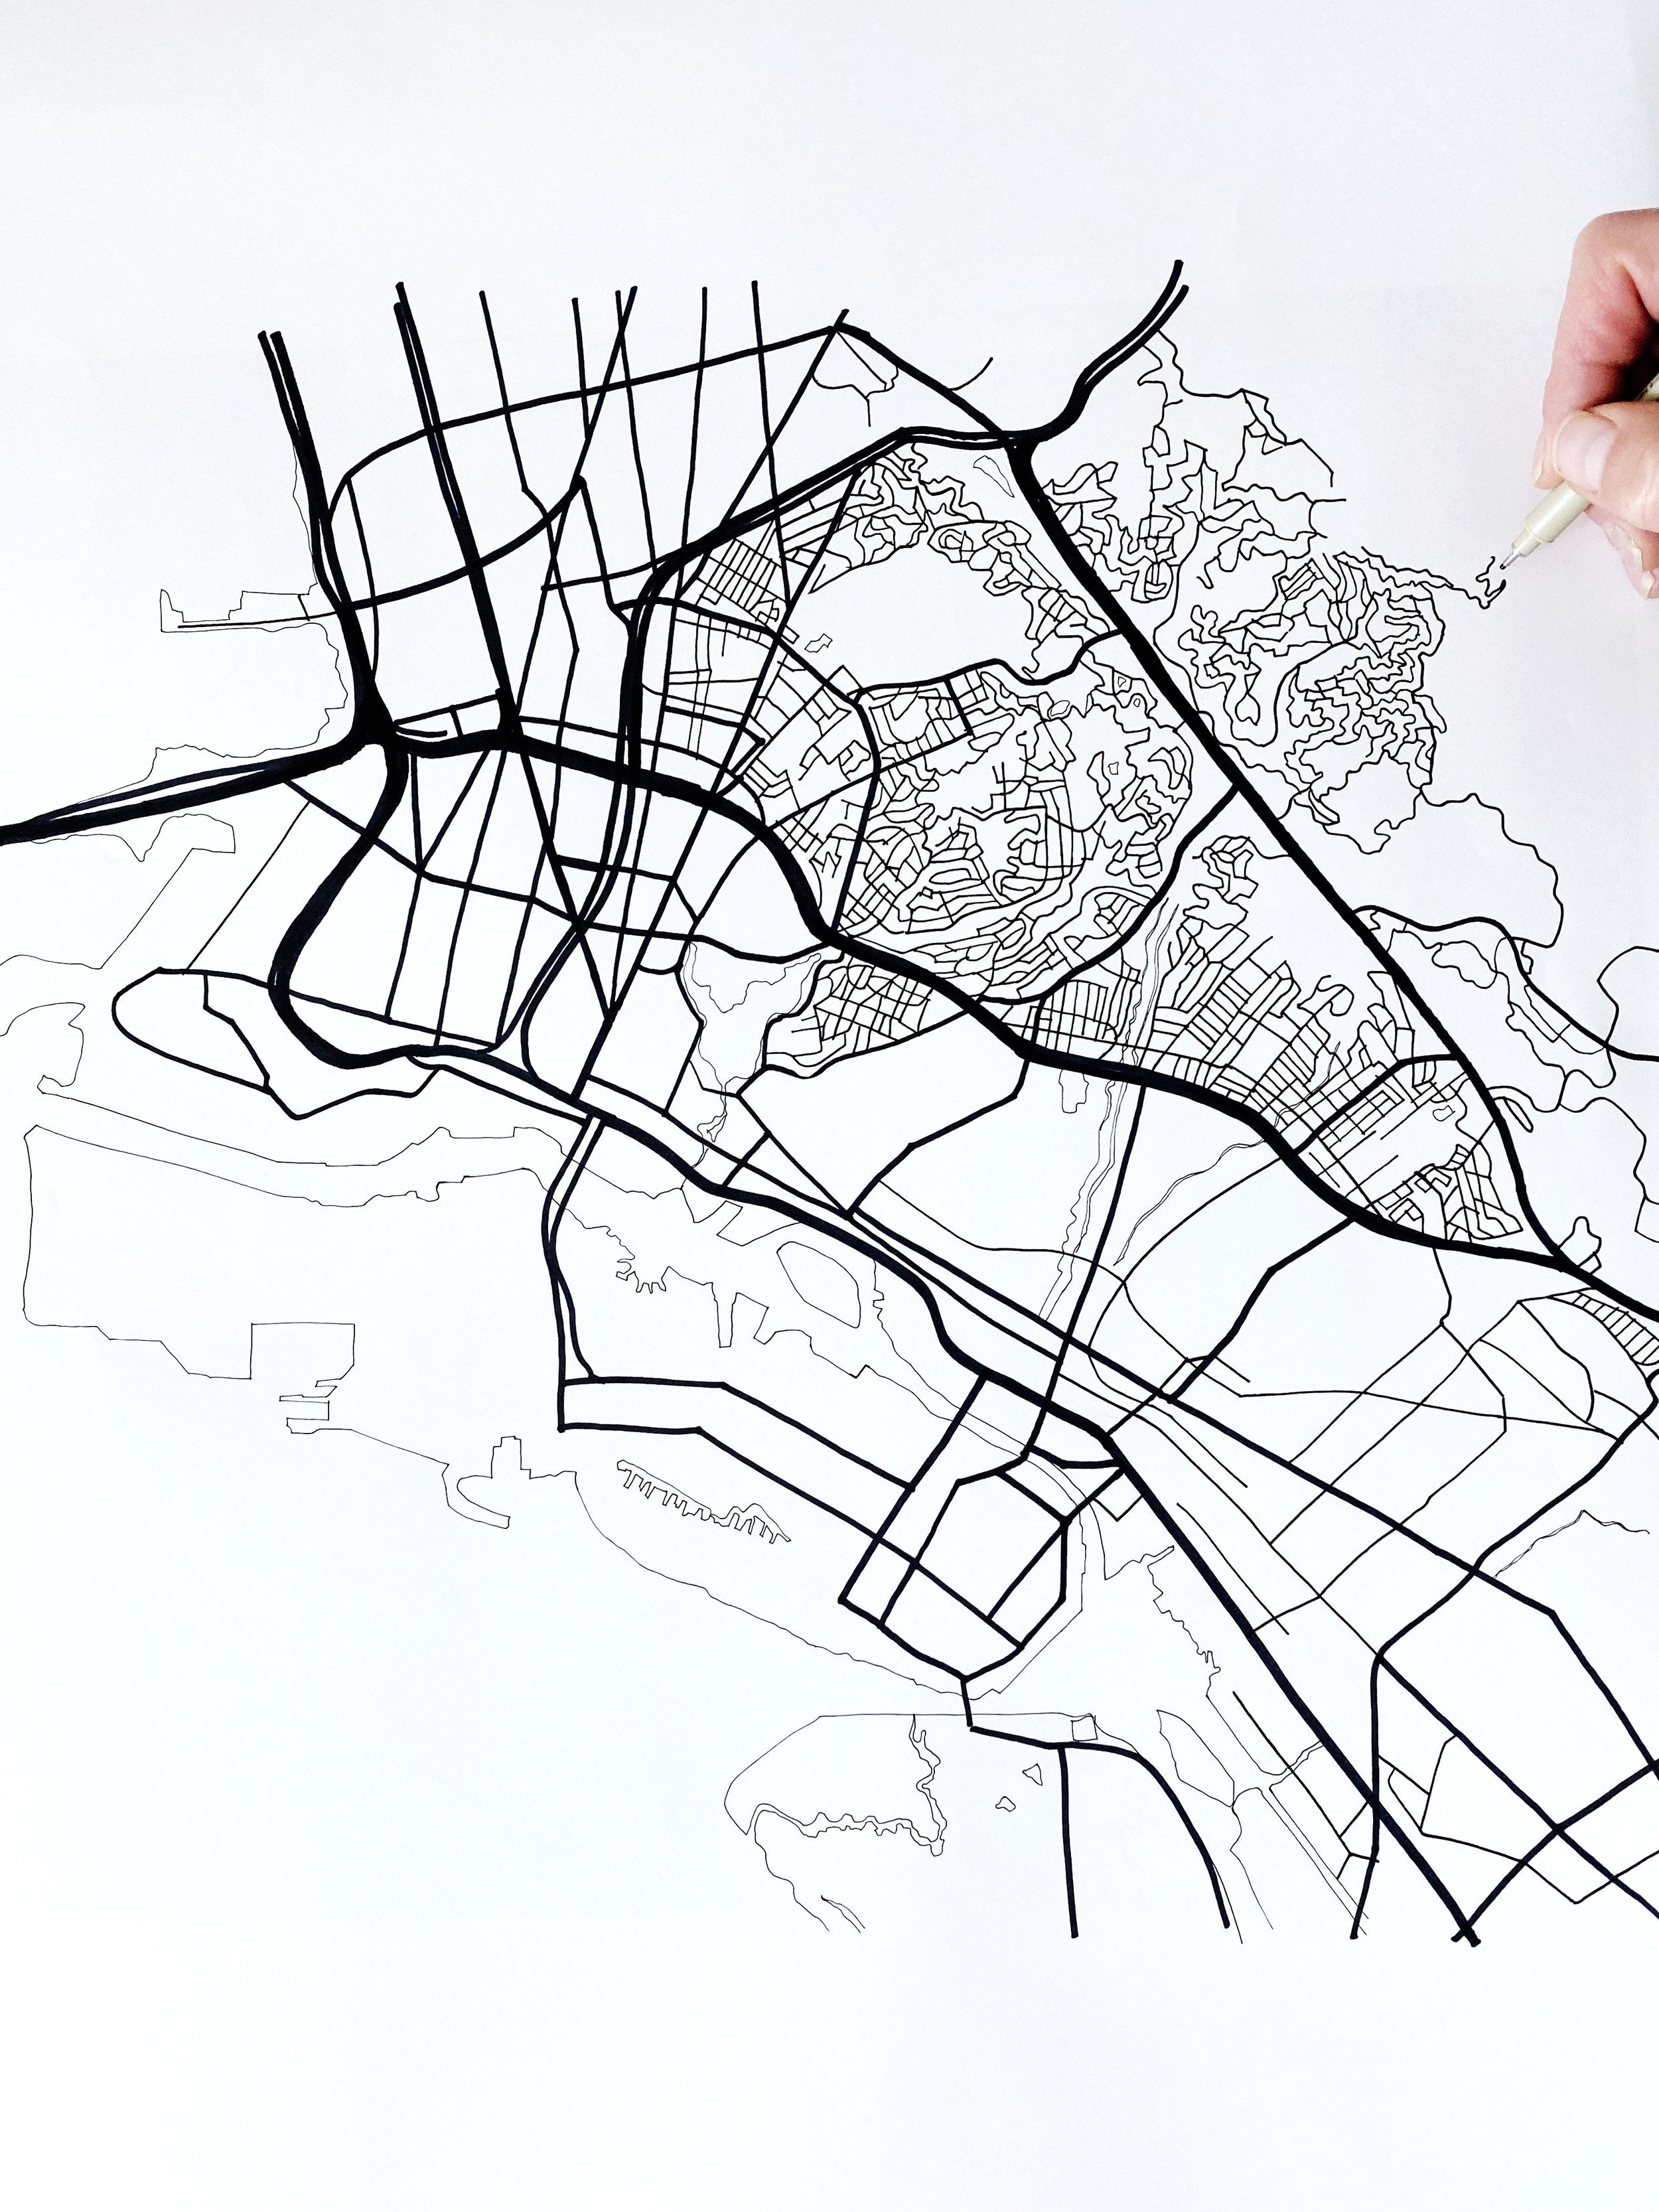 OAKLAND City Lines Map: PRINT